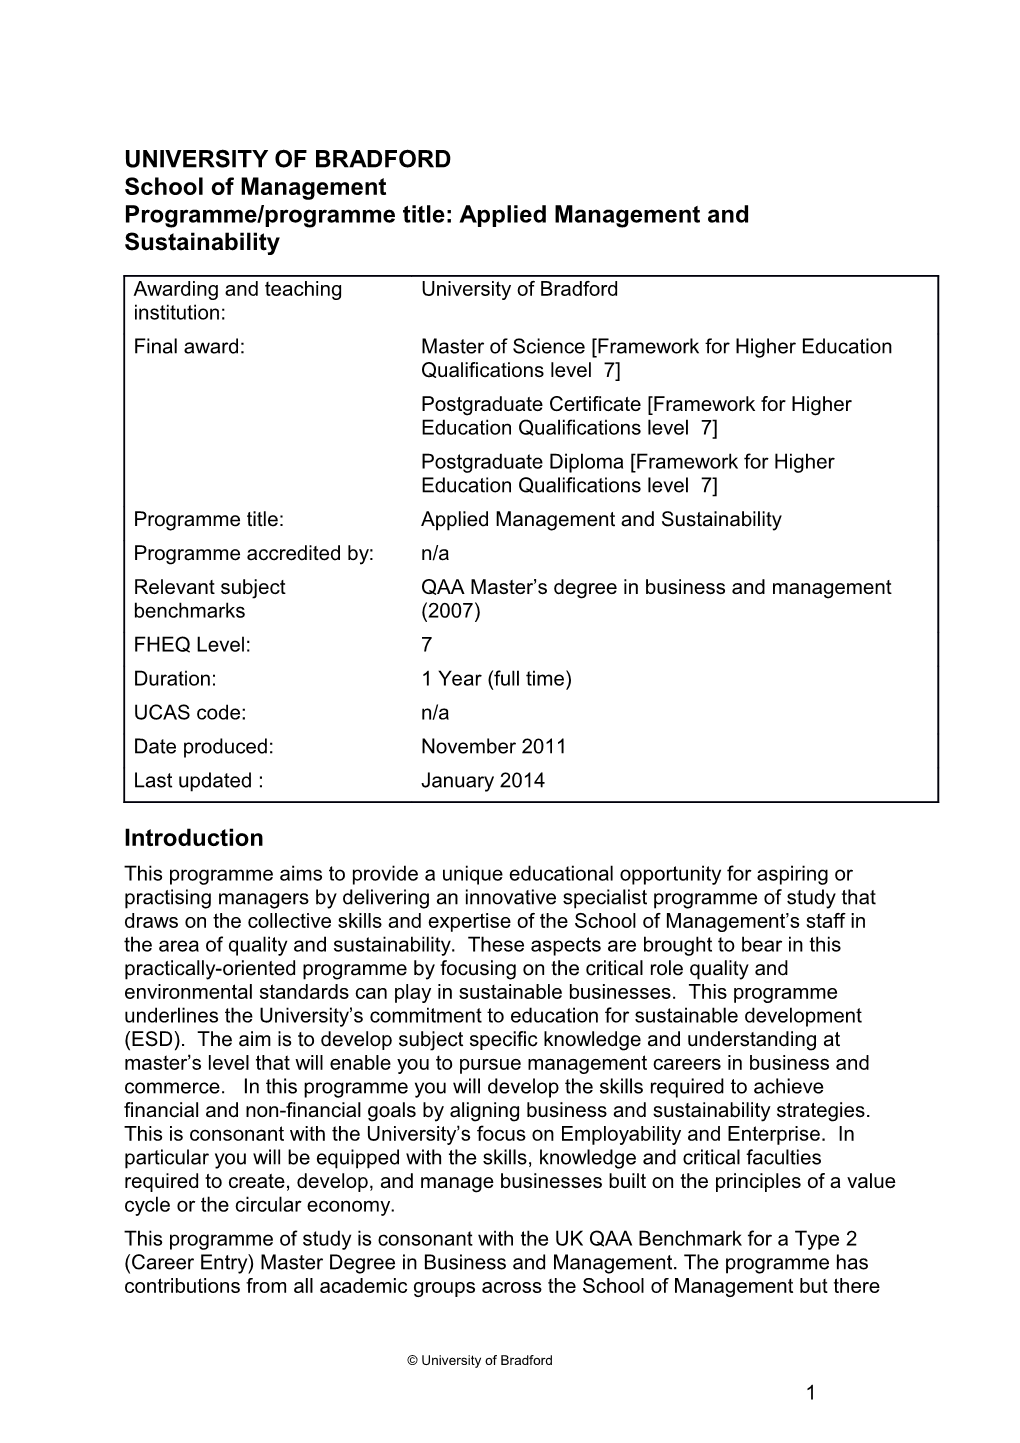 UNIVERSITY of BRADFORD School of Management Programme/Programme Title: Applied Management